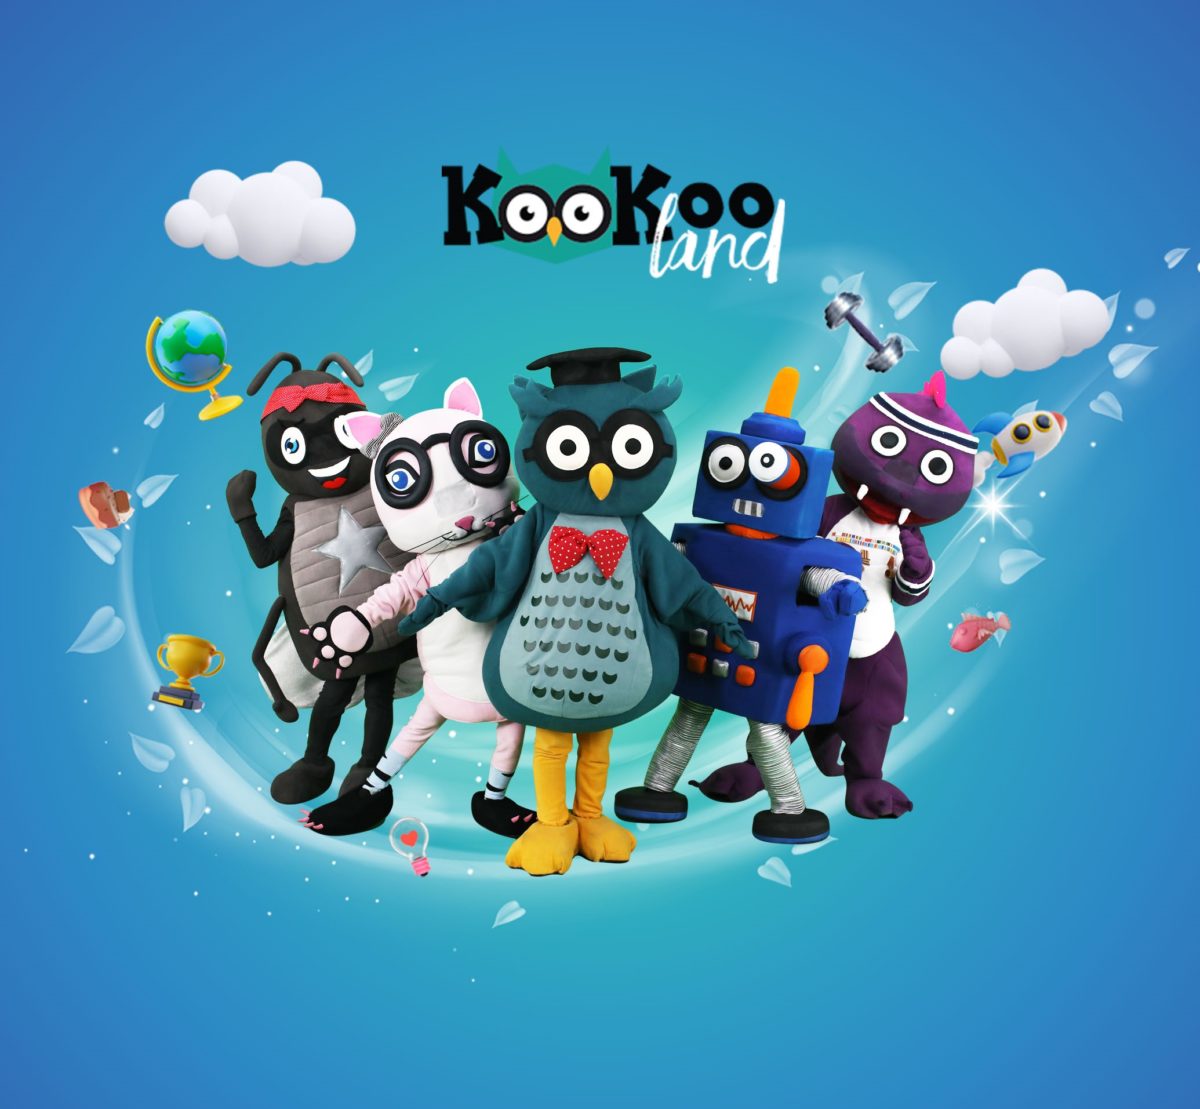 Kookooland: Νέα παιδική εκπομπή με φαντασία, δημιουργικό κέφι και αισιοδοξία στην ΕΡΤ